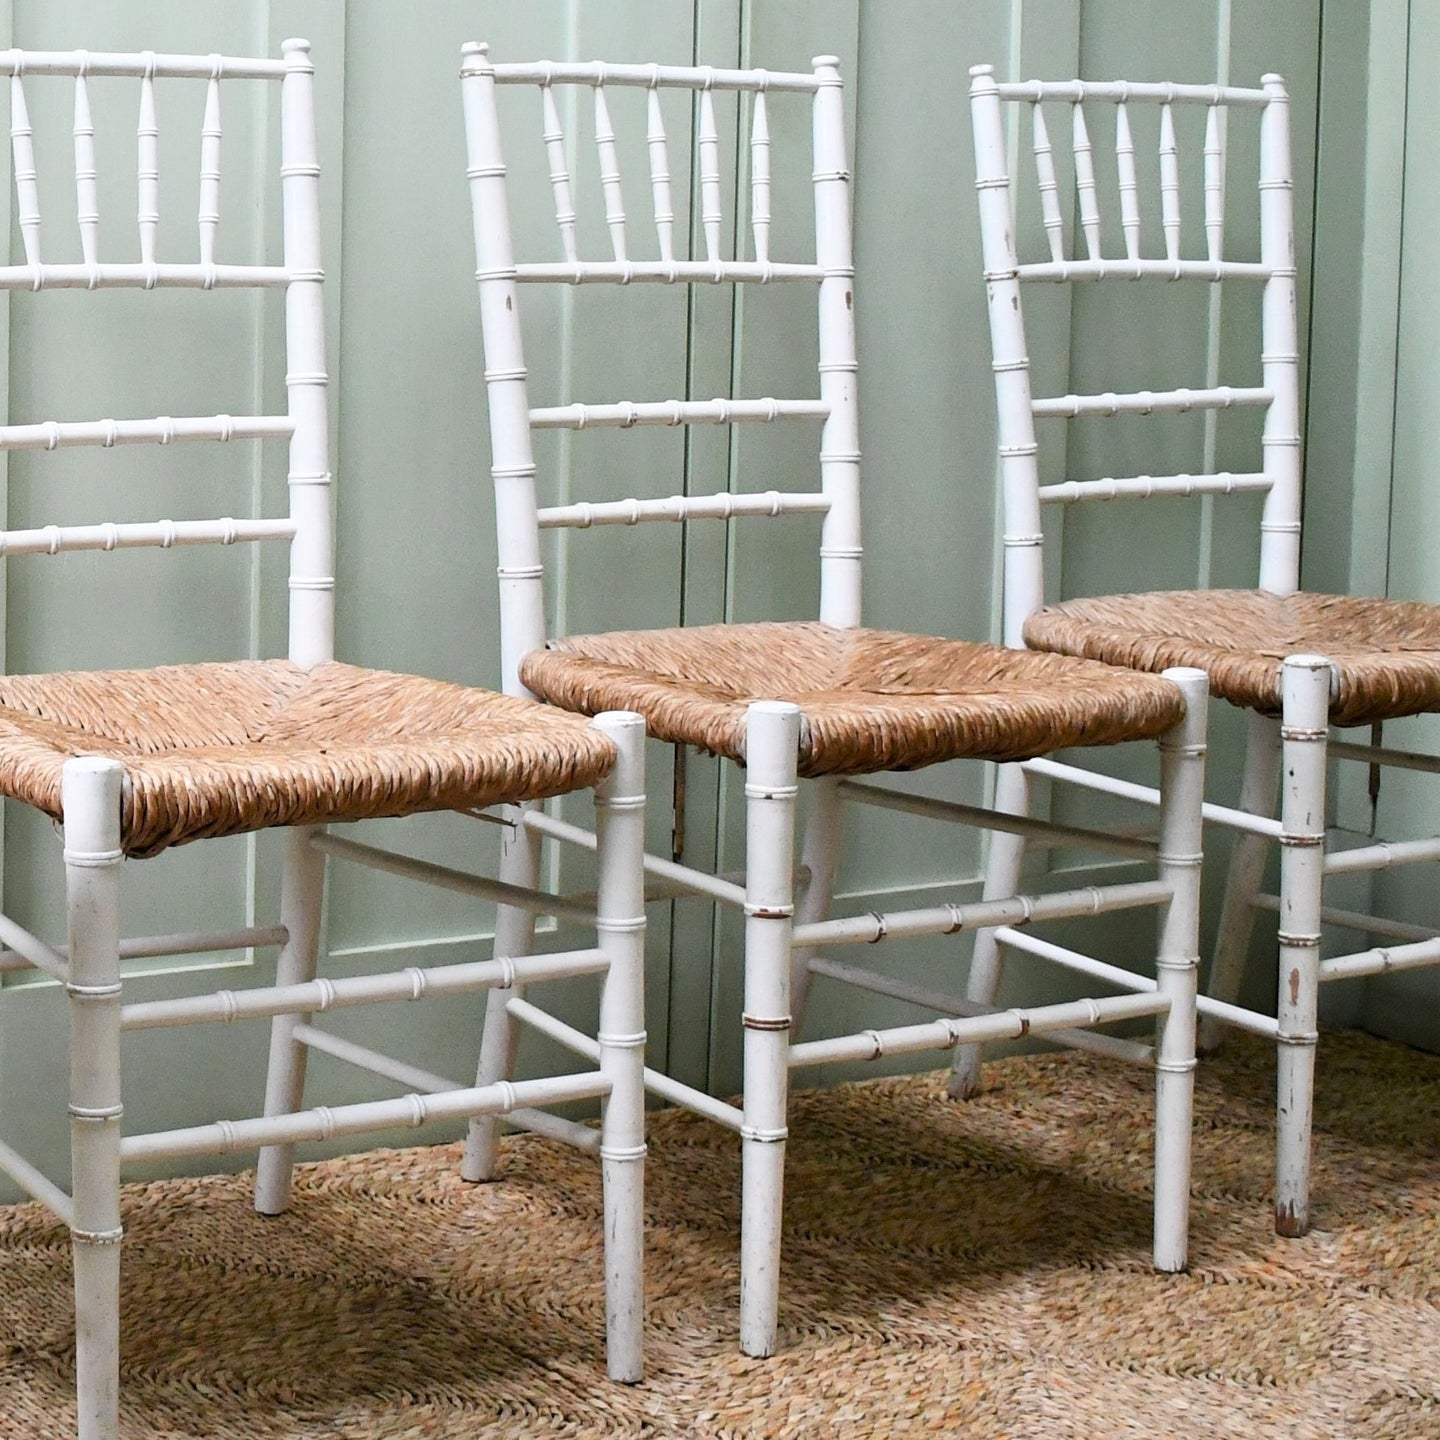 6 x Casa Pupo - Mid 20th Century Chairs